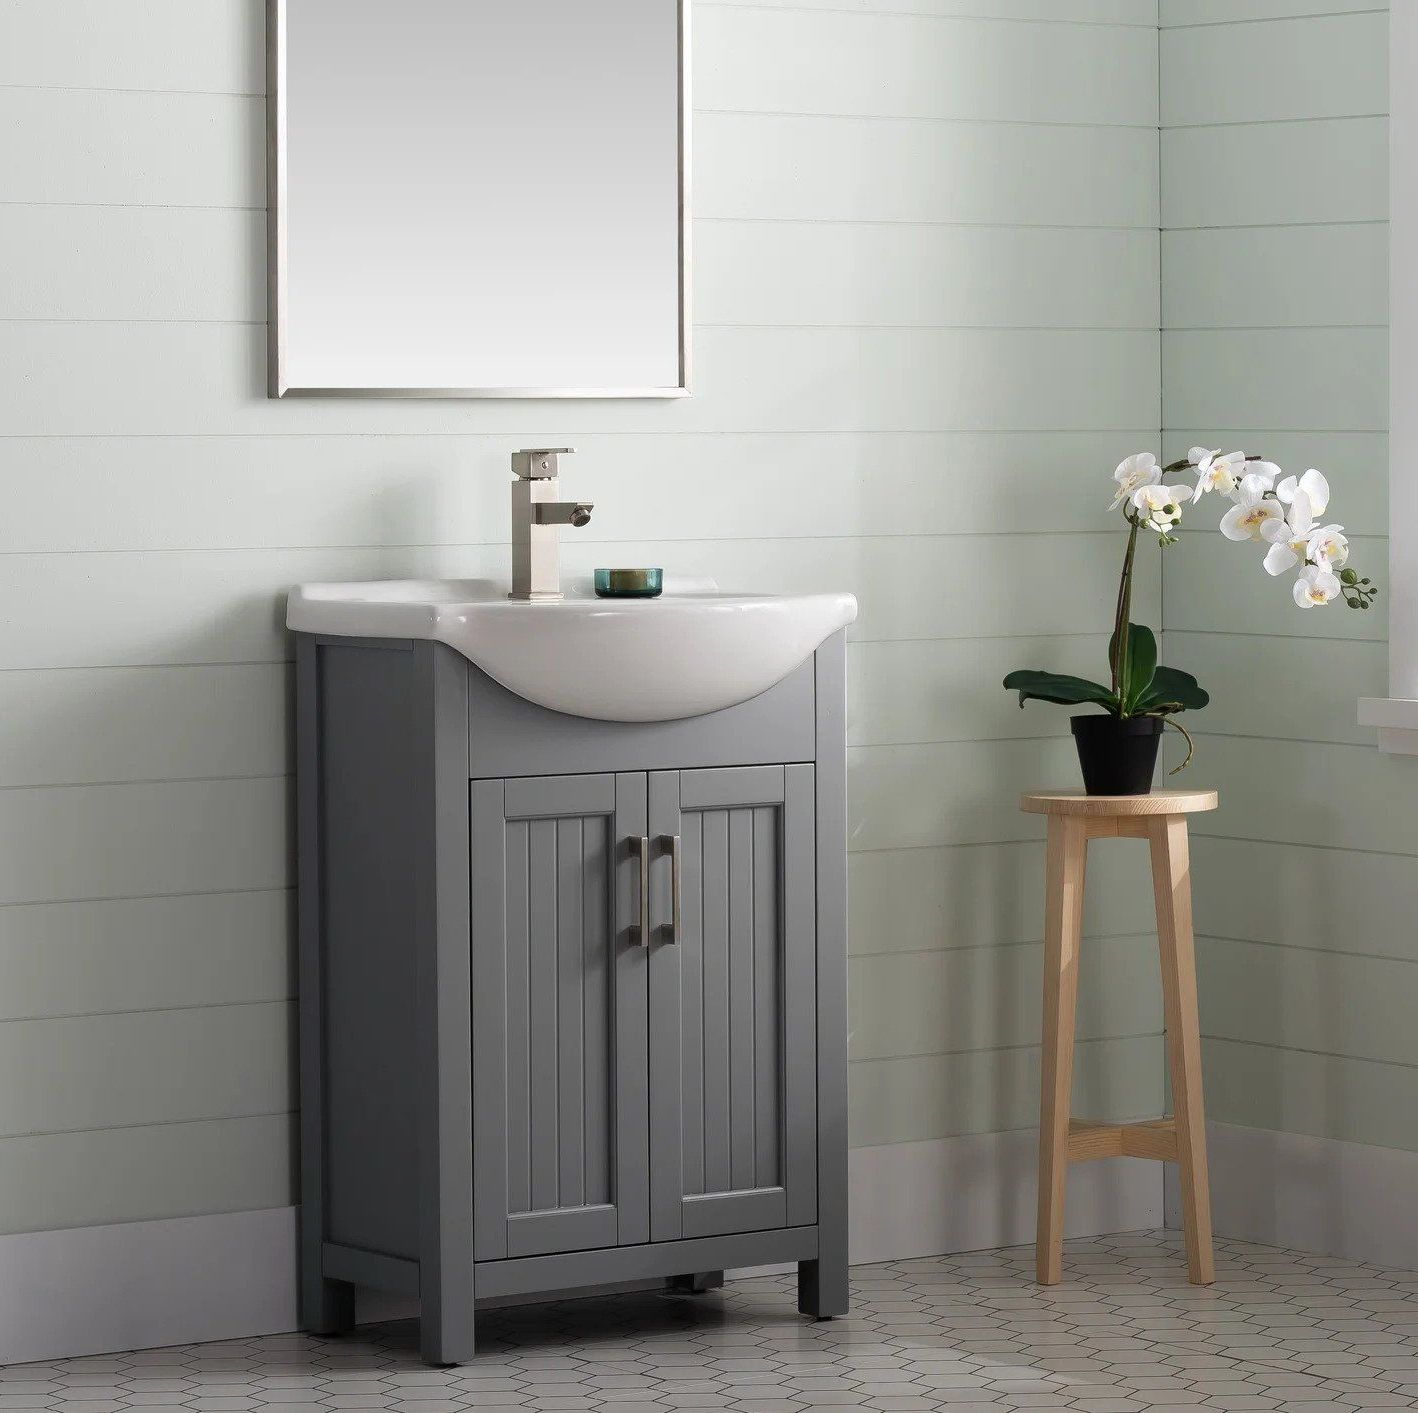 15 small bathroom vanities - most compact bathroom vanity sets